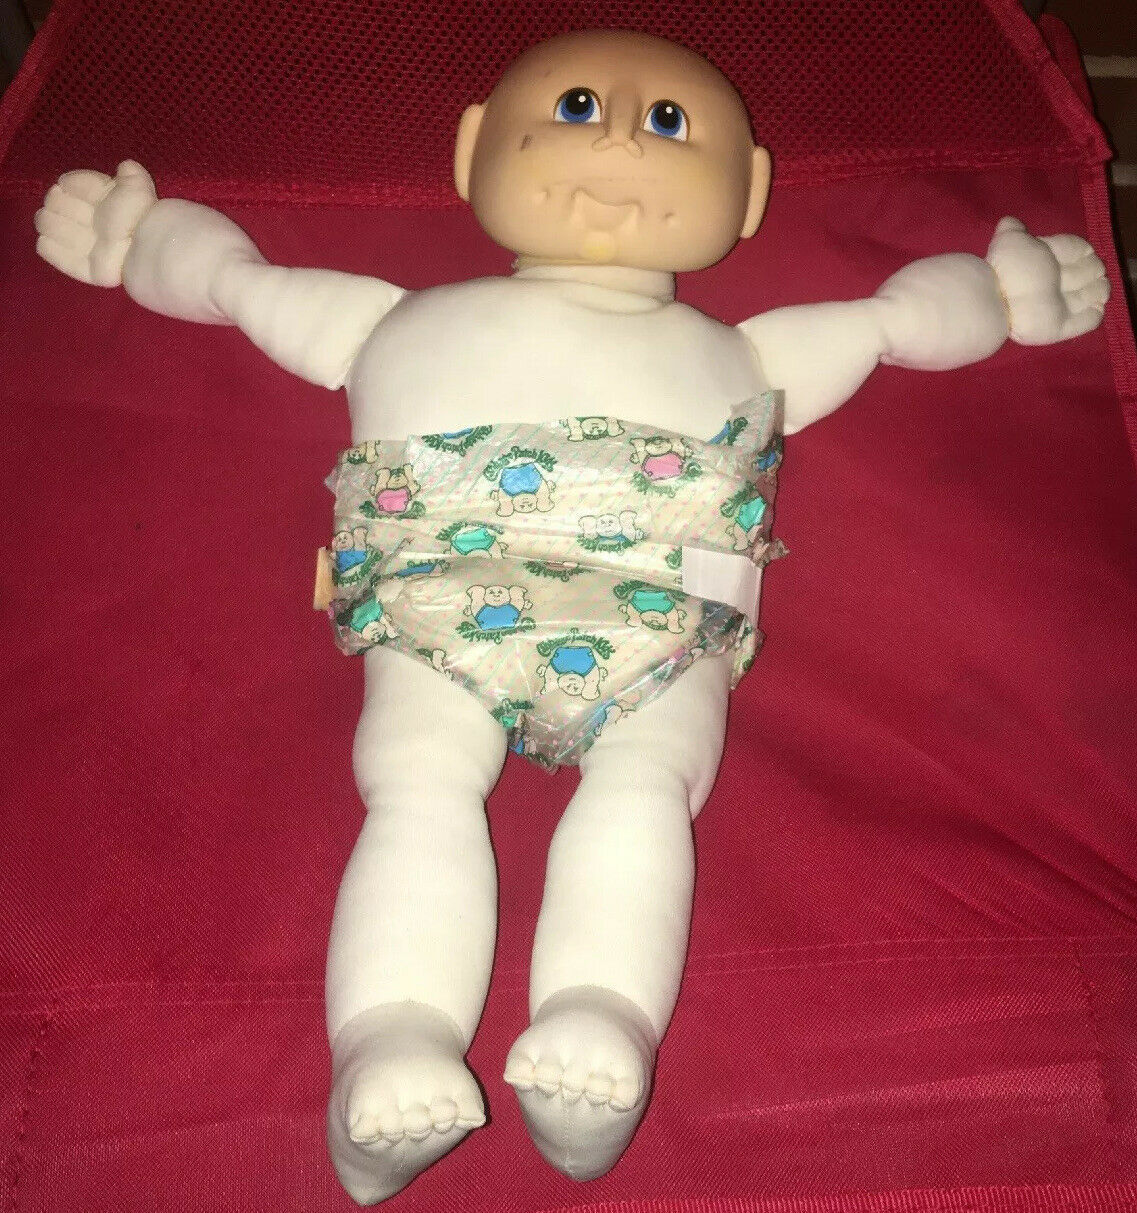 bald headed baby dolls